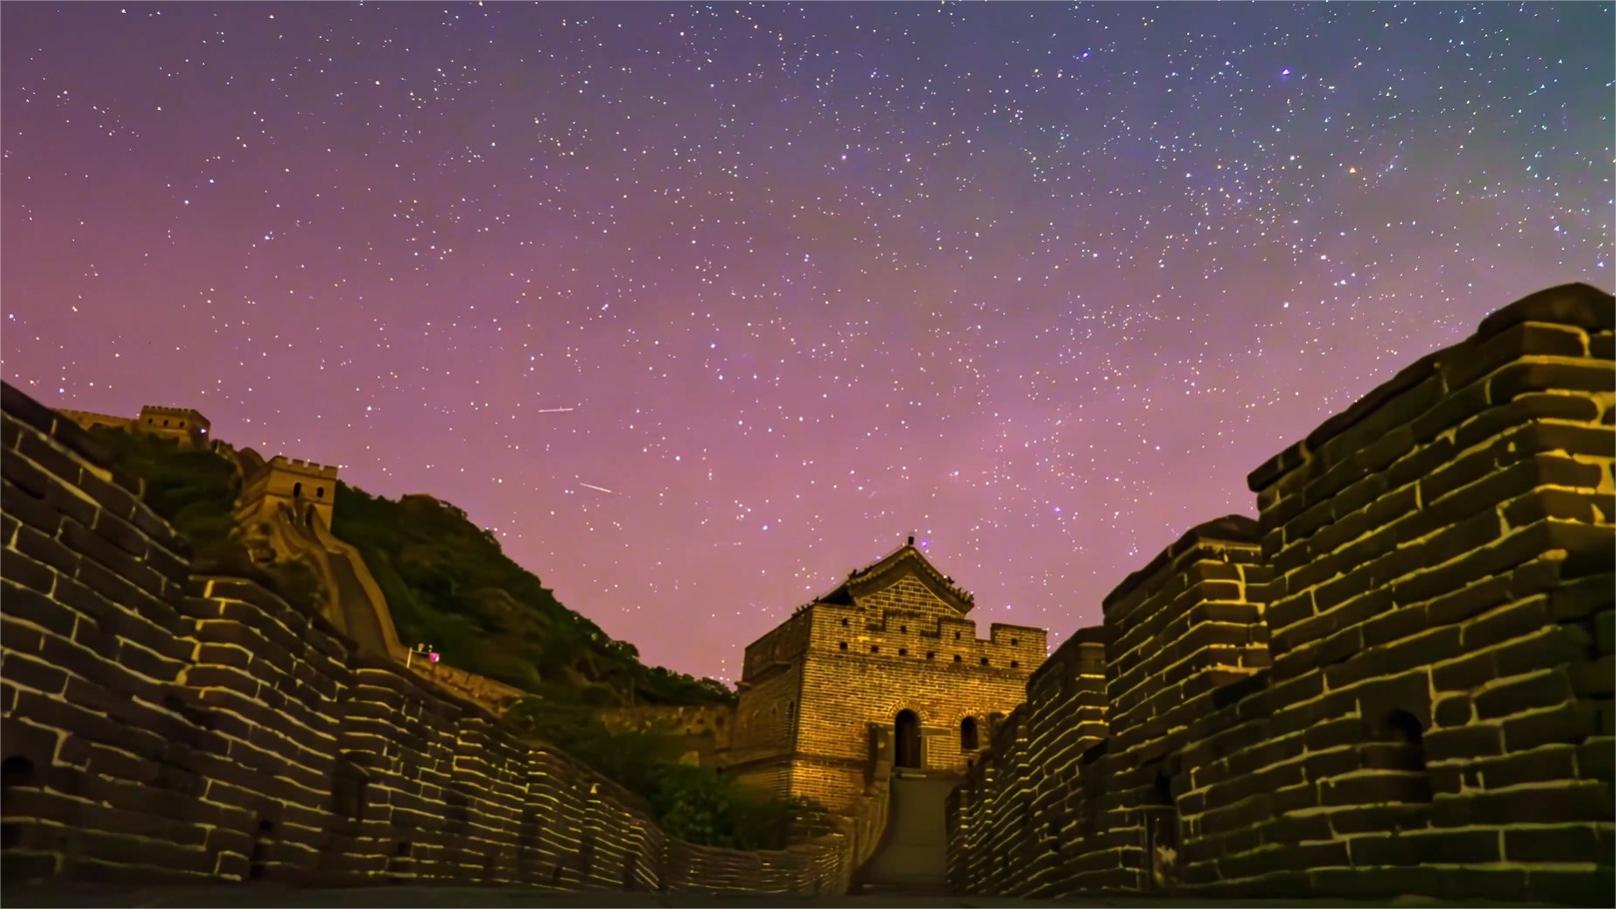 Rarely seen auroras illuminate Great Wall in Beijing